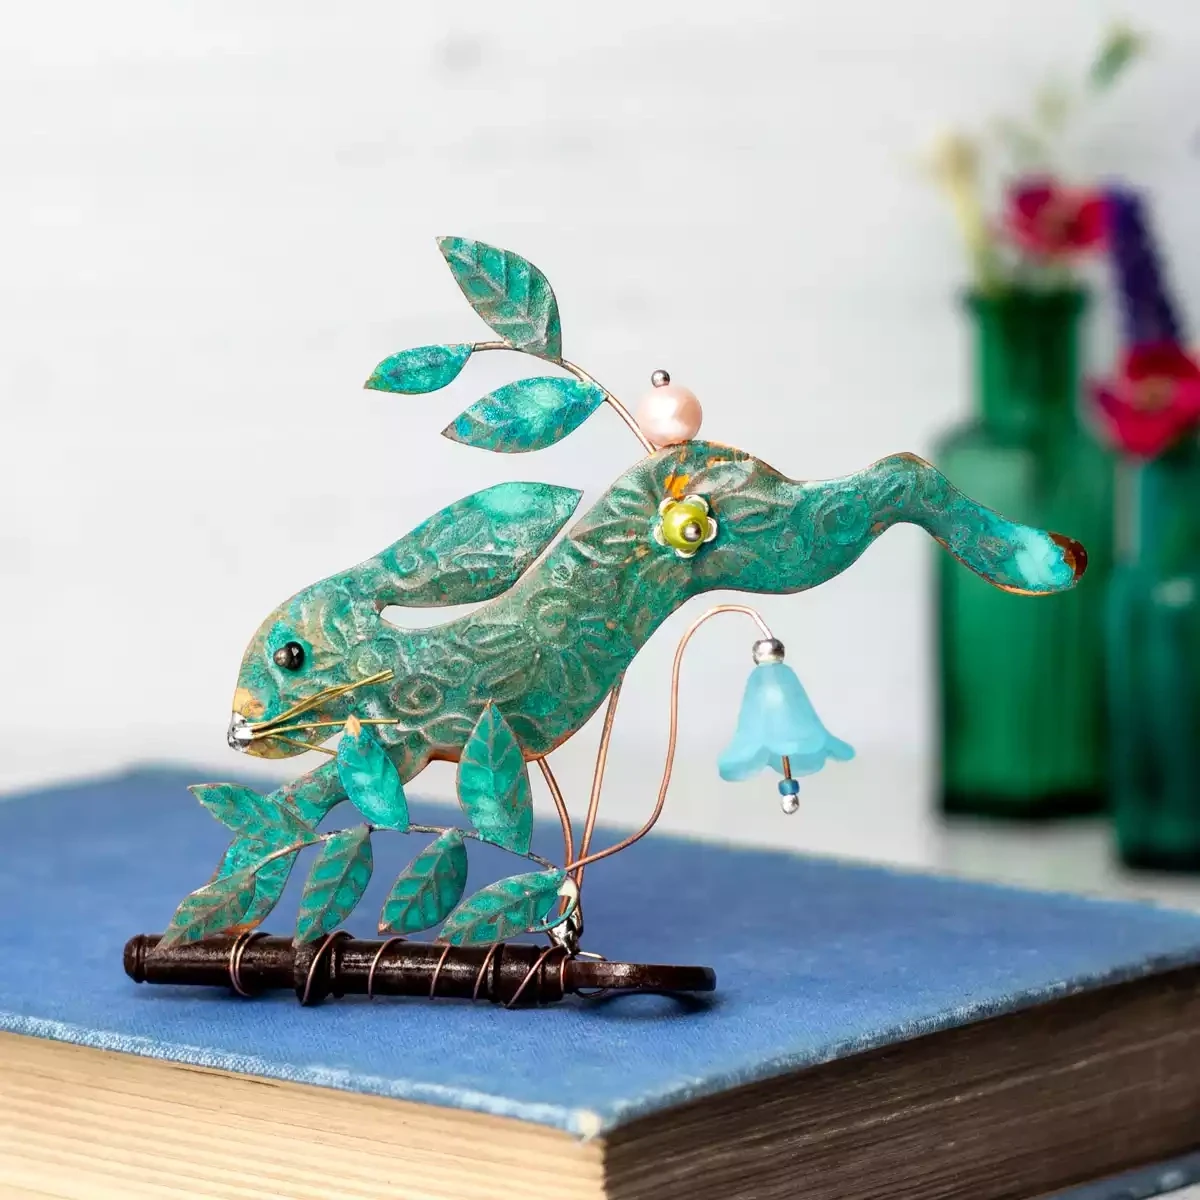 Leaping Hare on Antique Key Mini Sculpture by Linda Lovatt